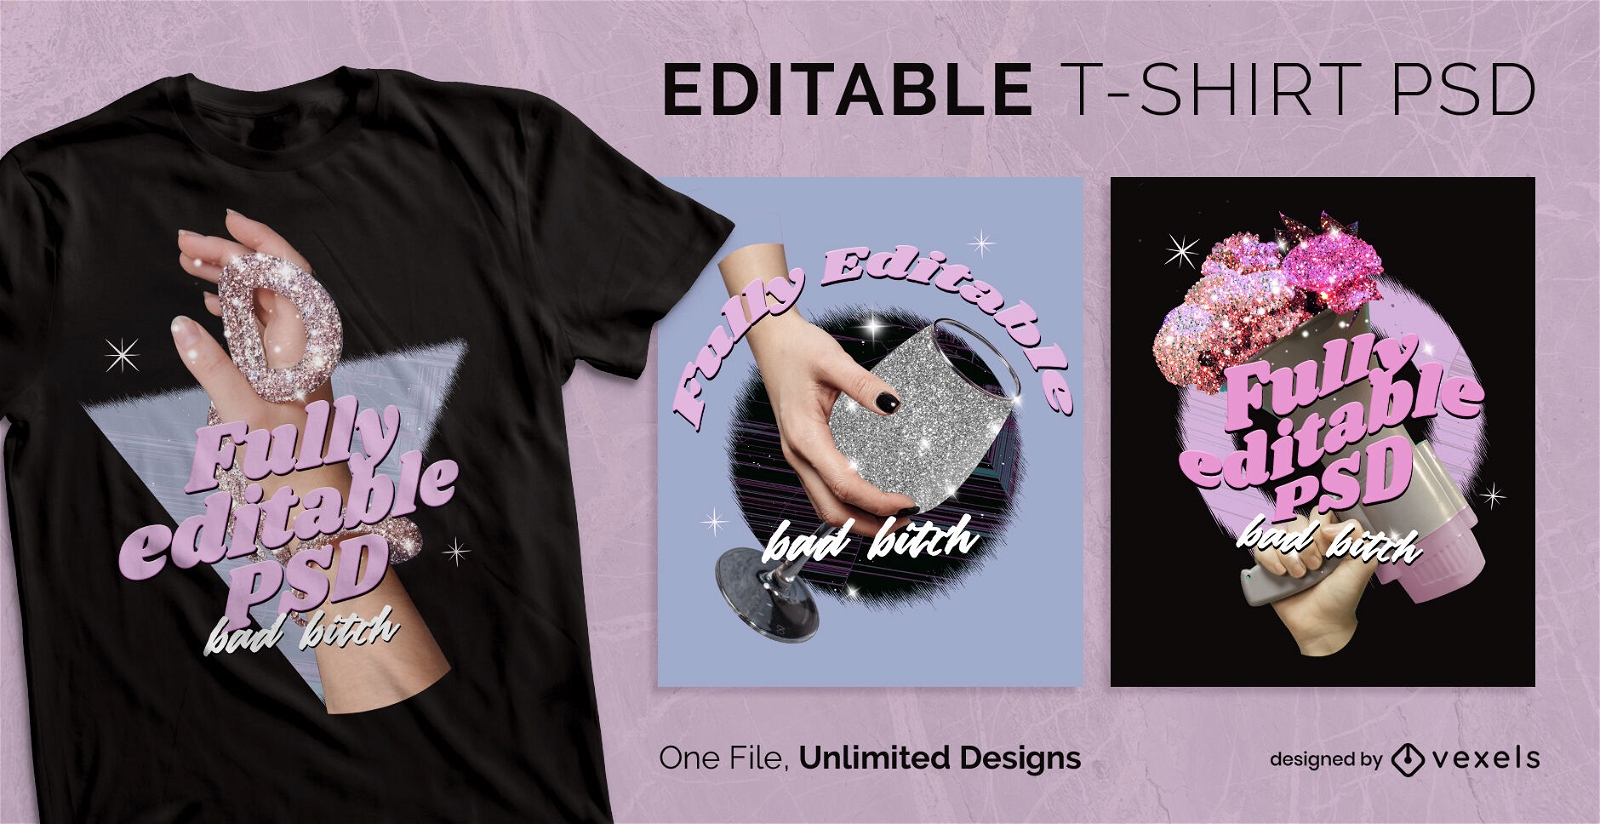 Bad bitch glitter scalable t-shirt psd